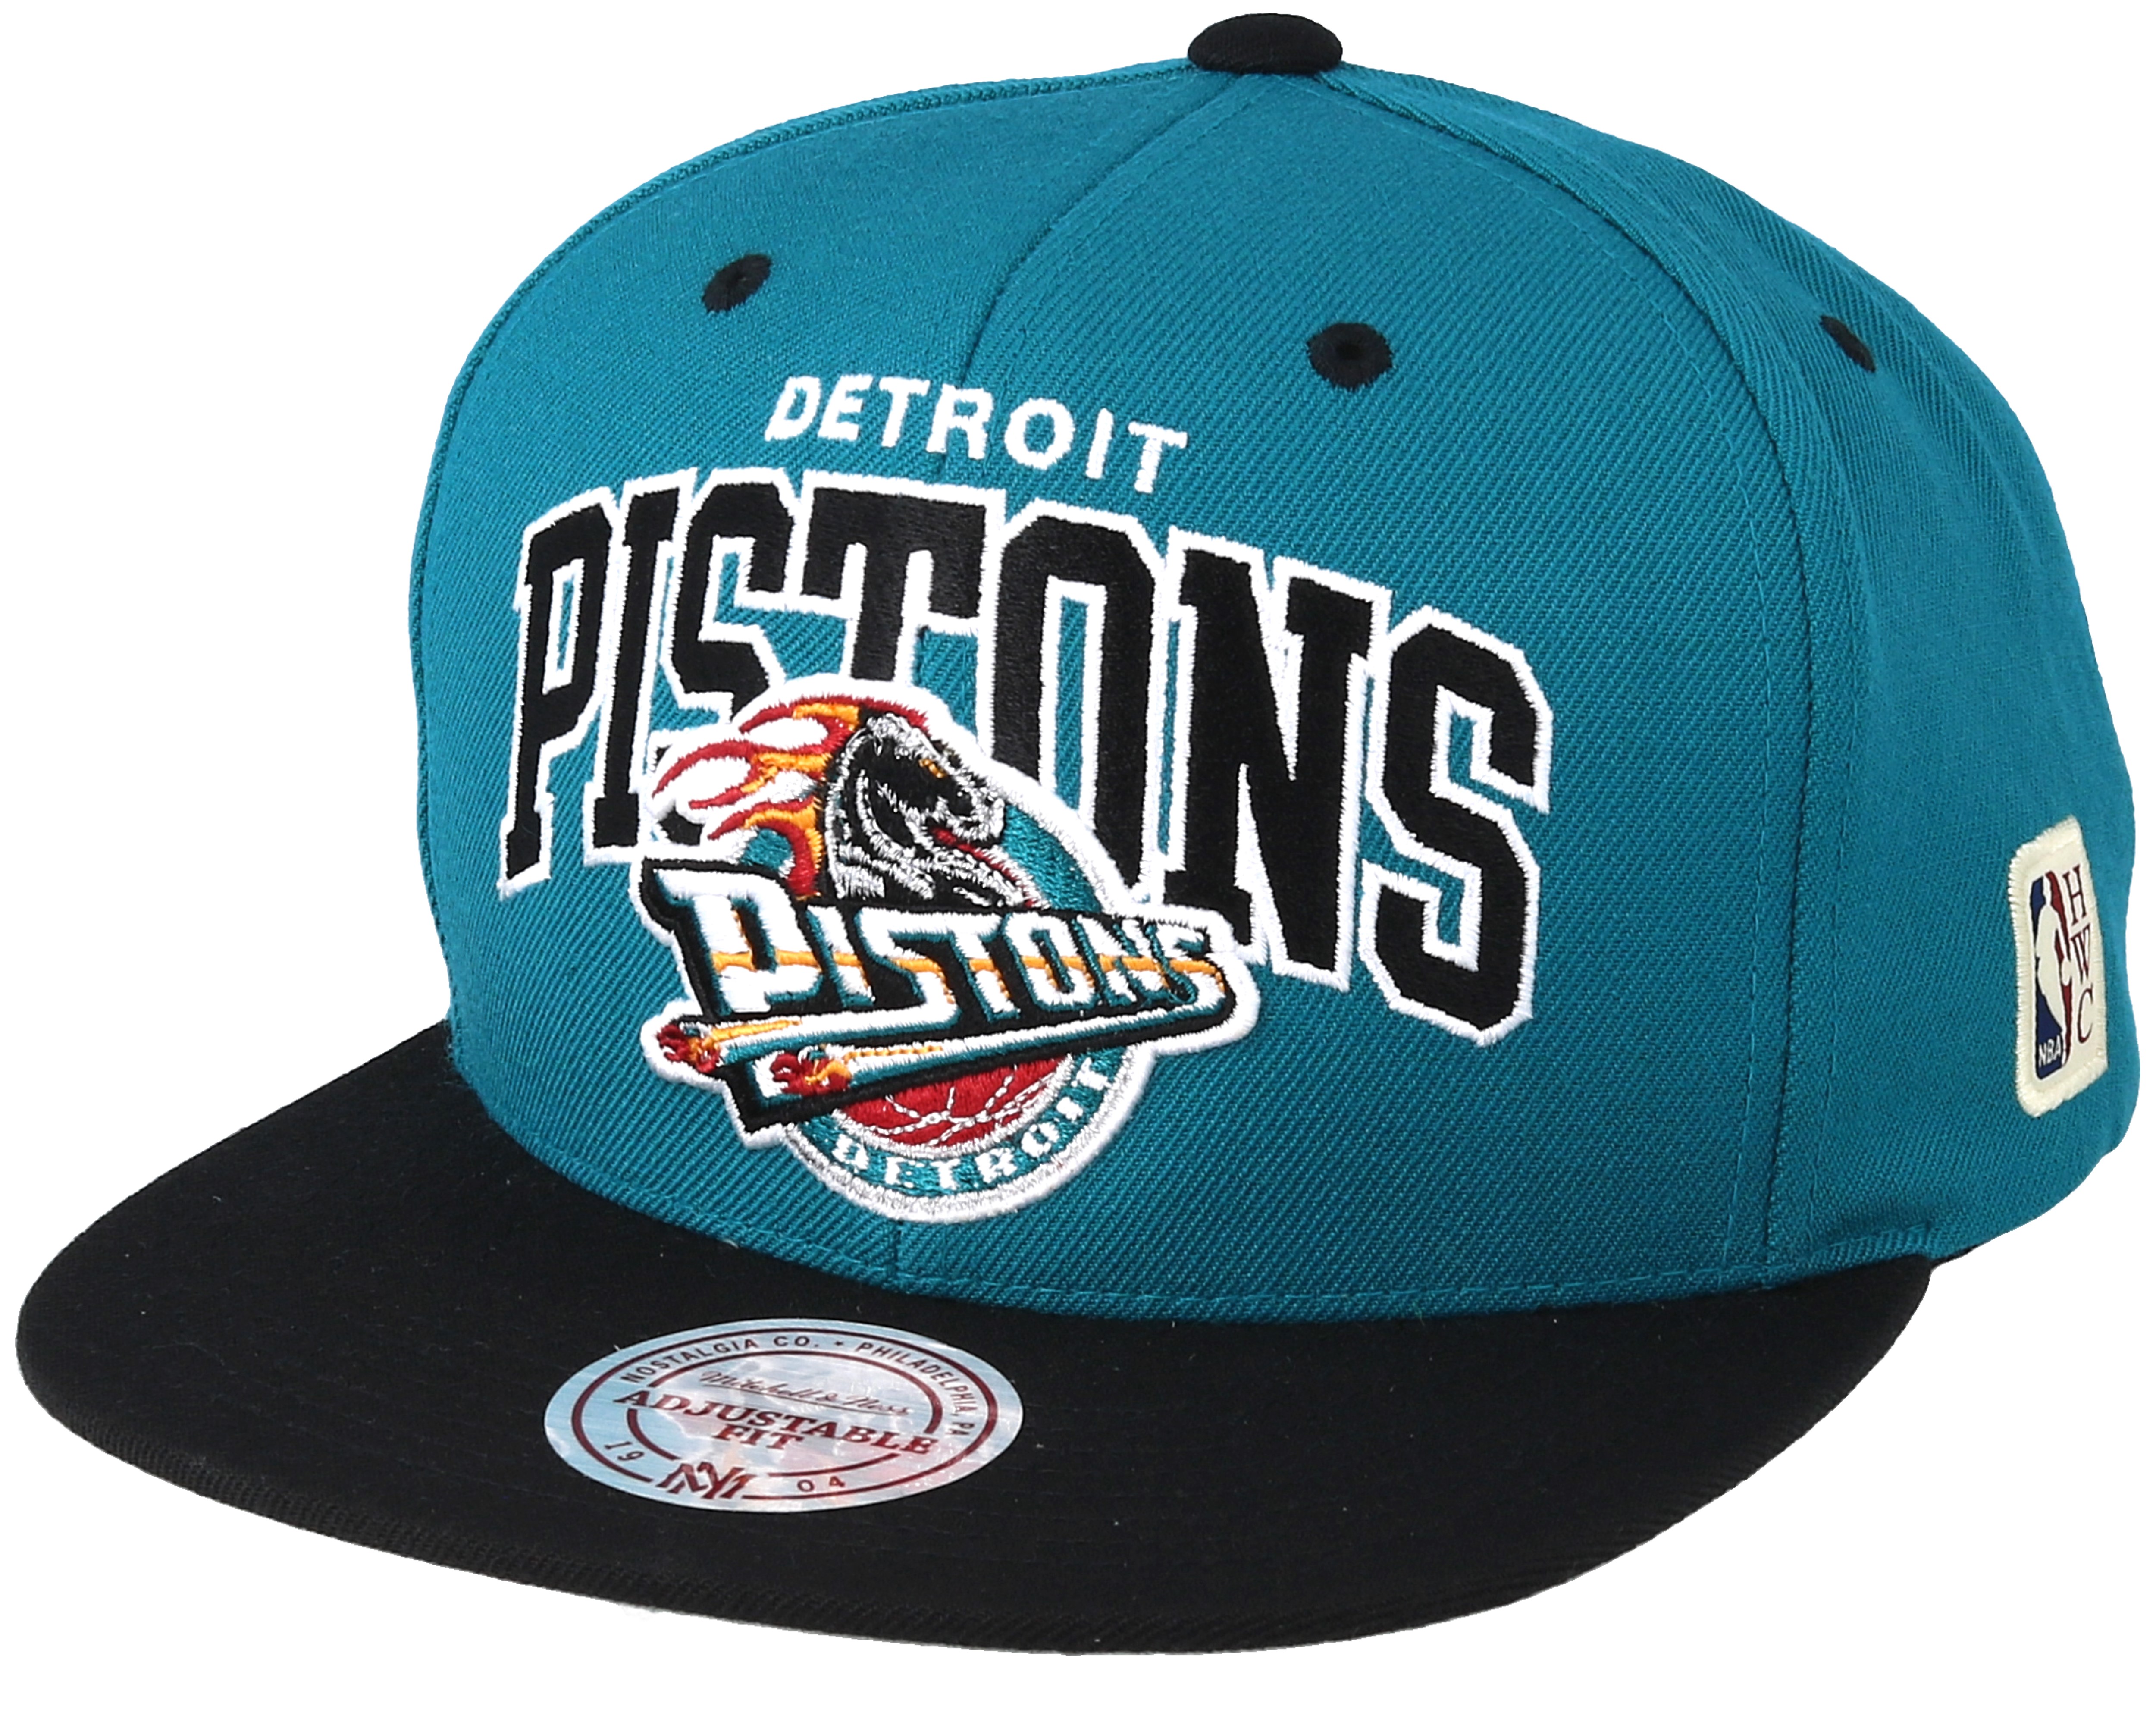 Detroit Pistons Team Arch Teal/Black Snapback - Mitchell & Ness